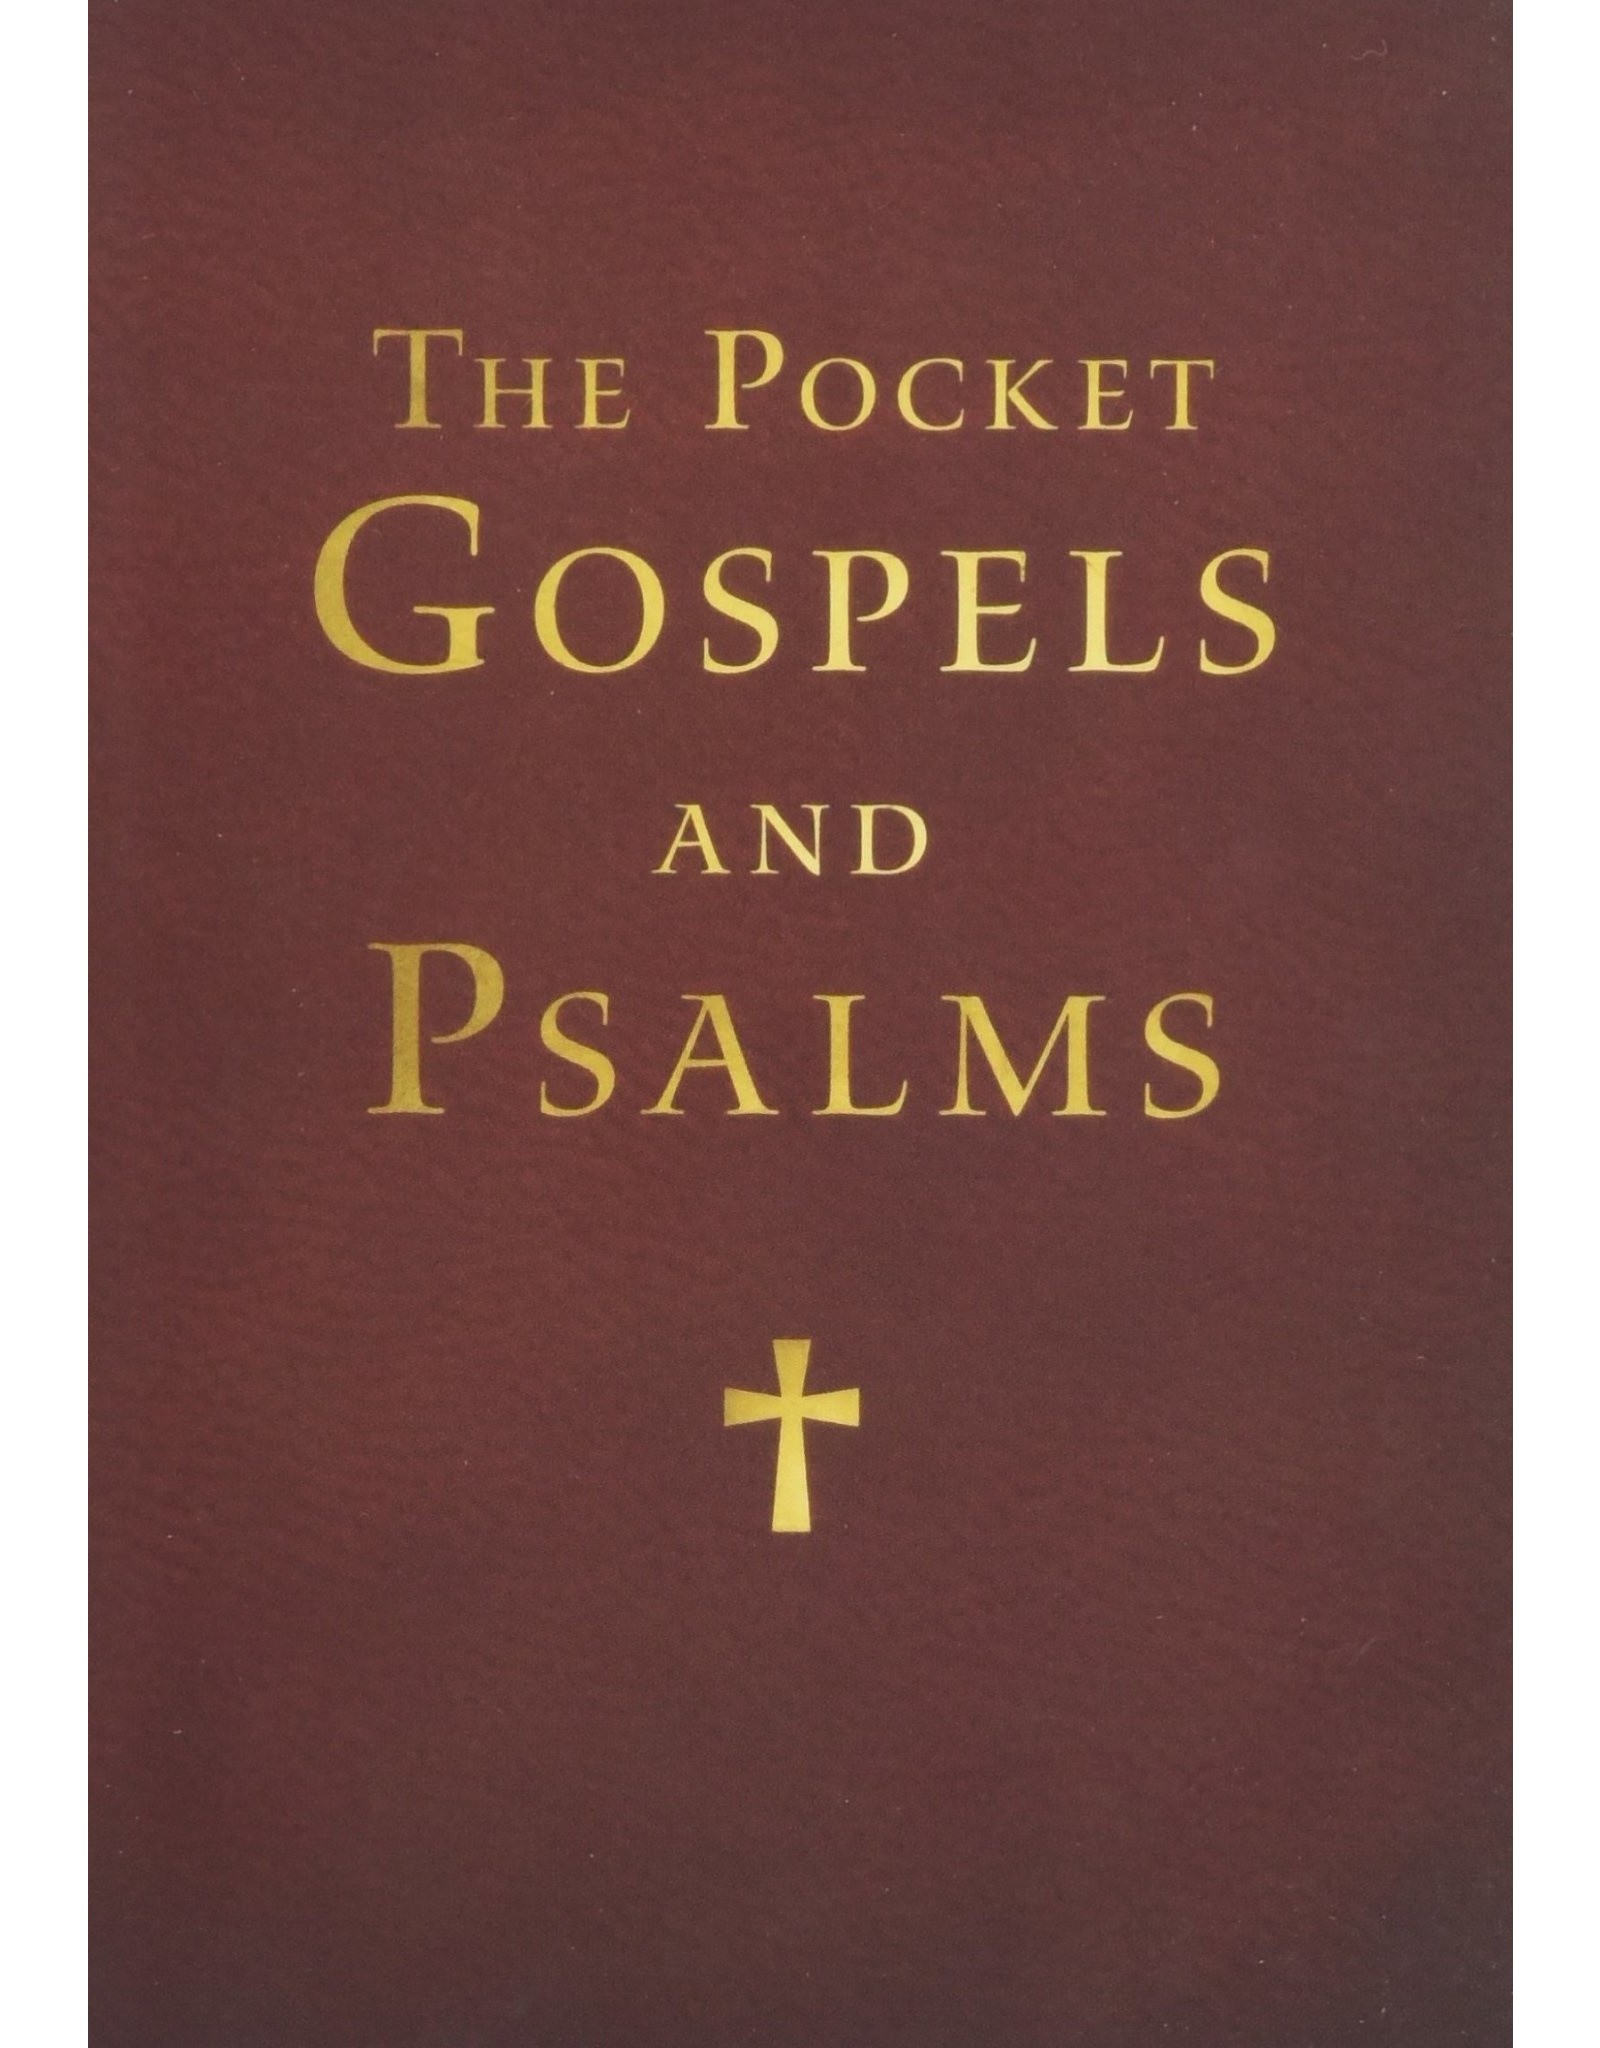 OSV (Our Sunday Visitor) NRSV Pocket Gospels & Psalms